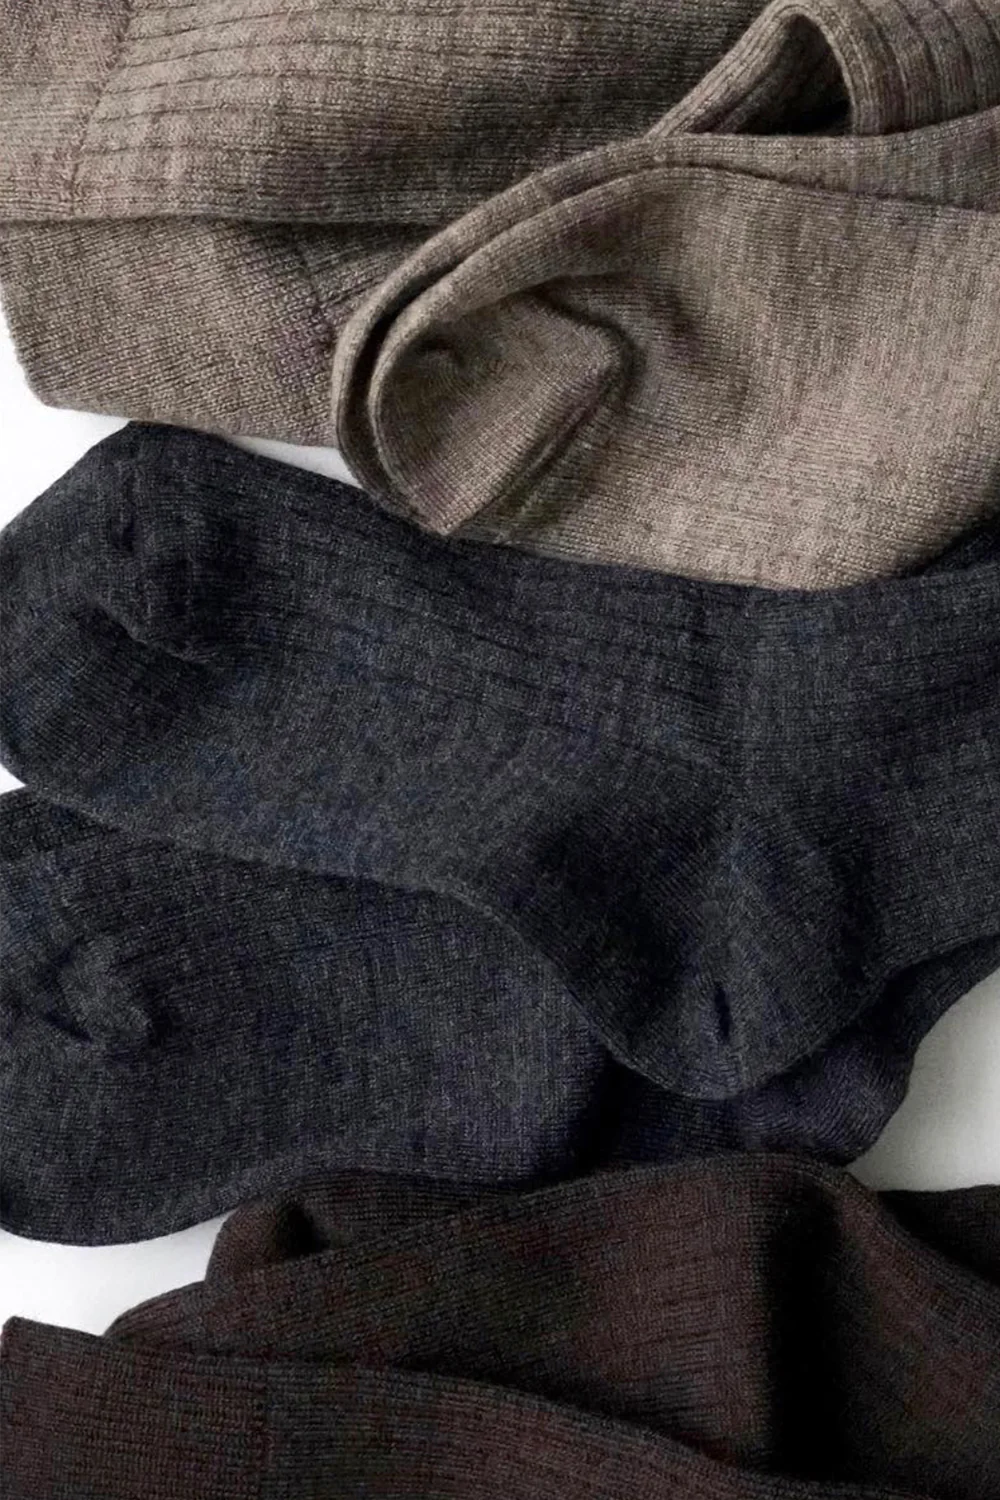 HK0116 Merino Wool Ribbed High Socks, Mocha Brown